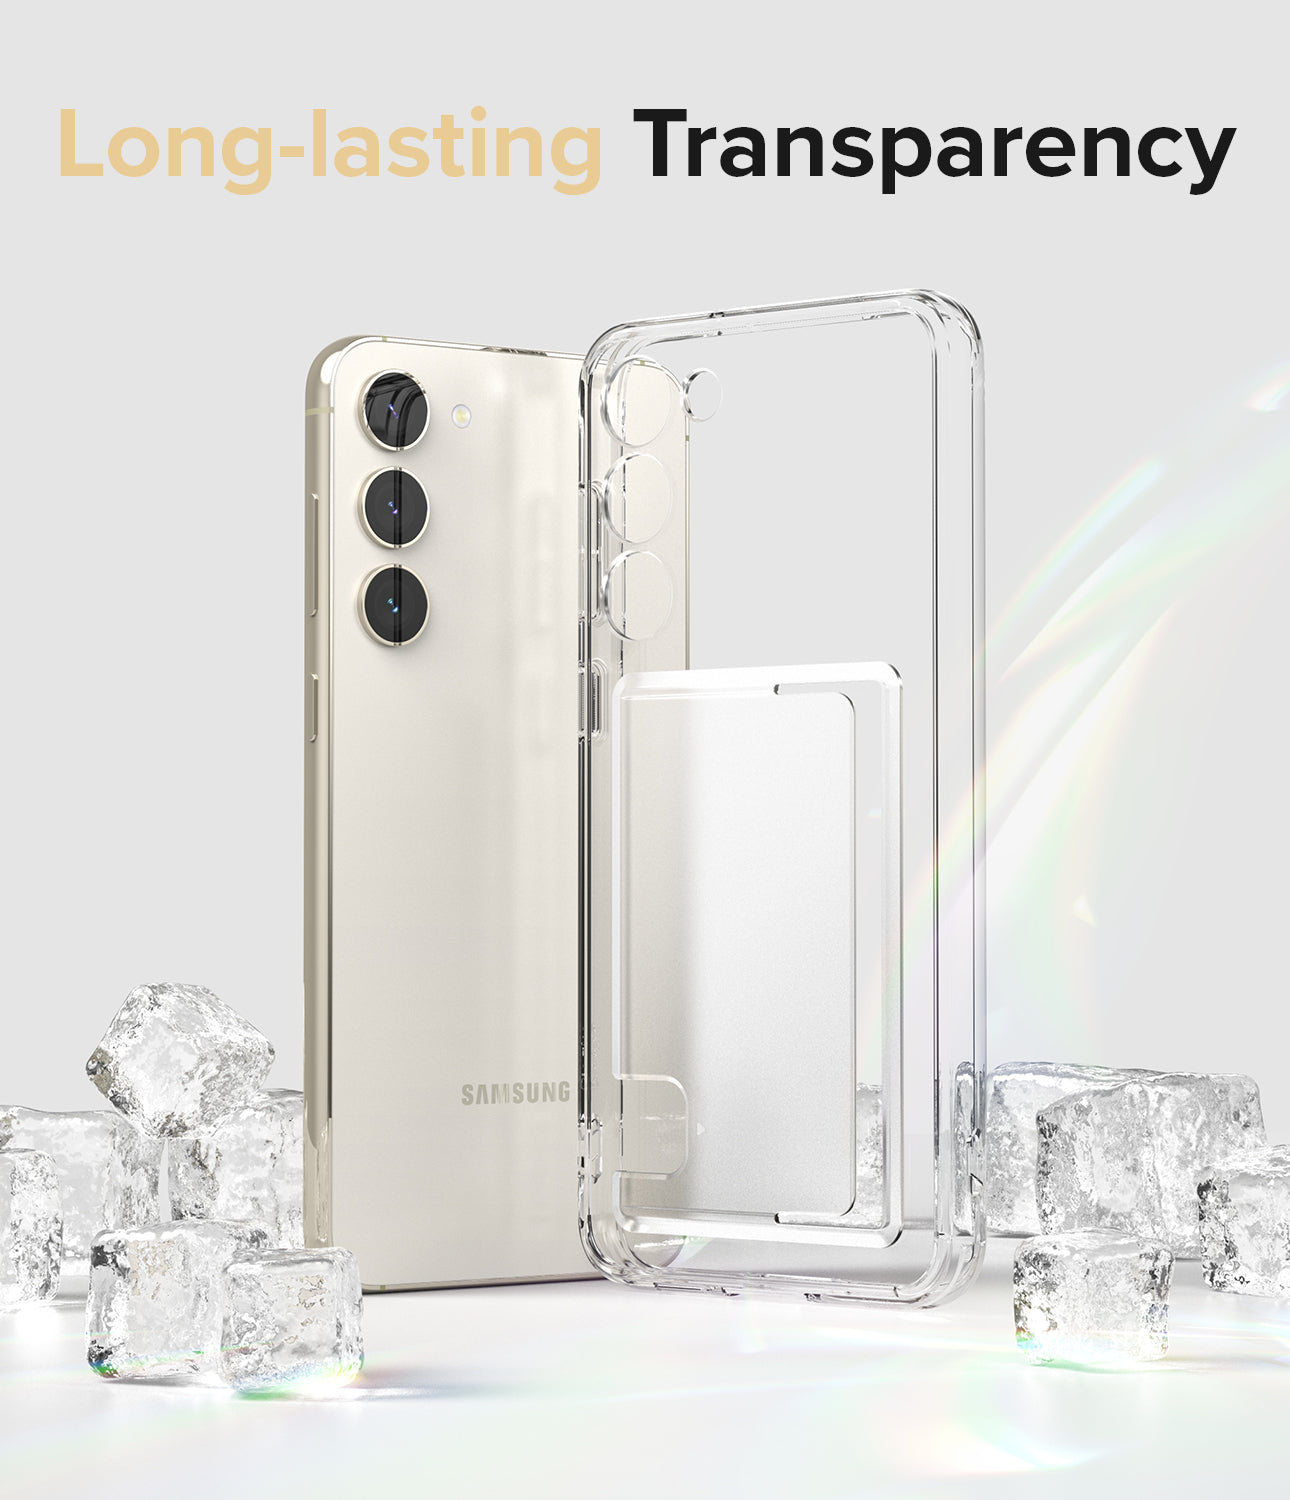 Long-lasting Transparency